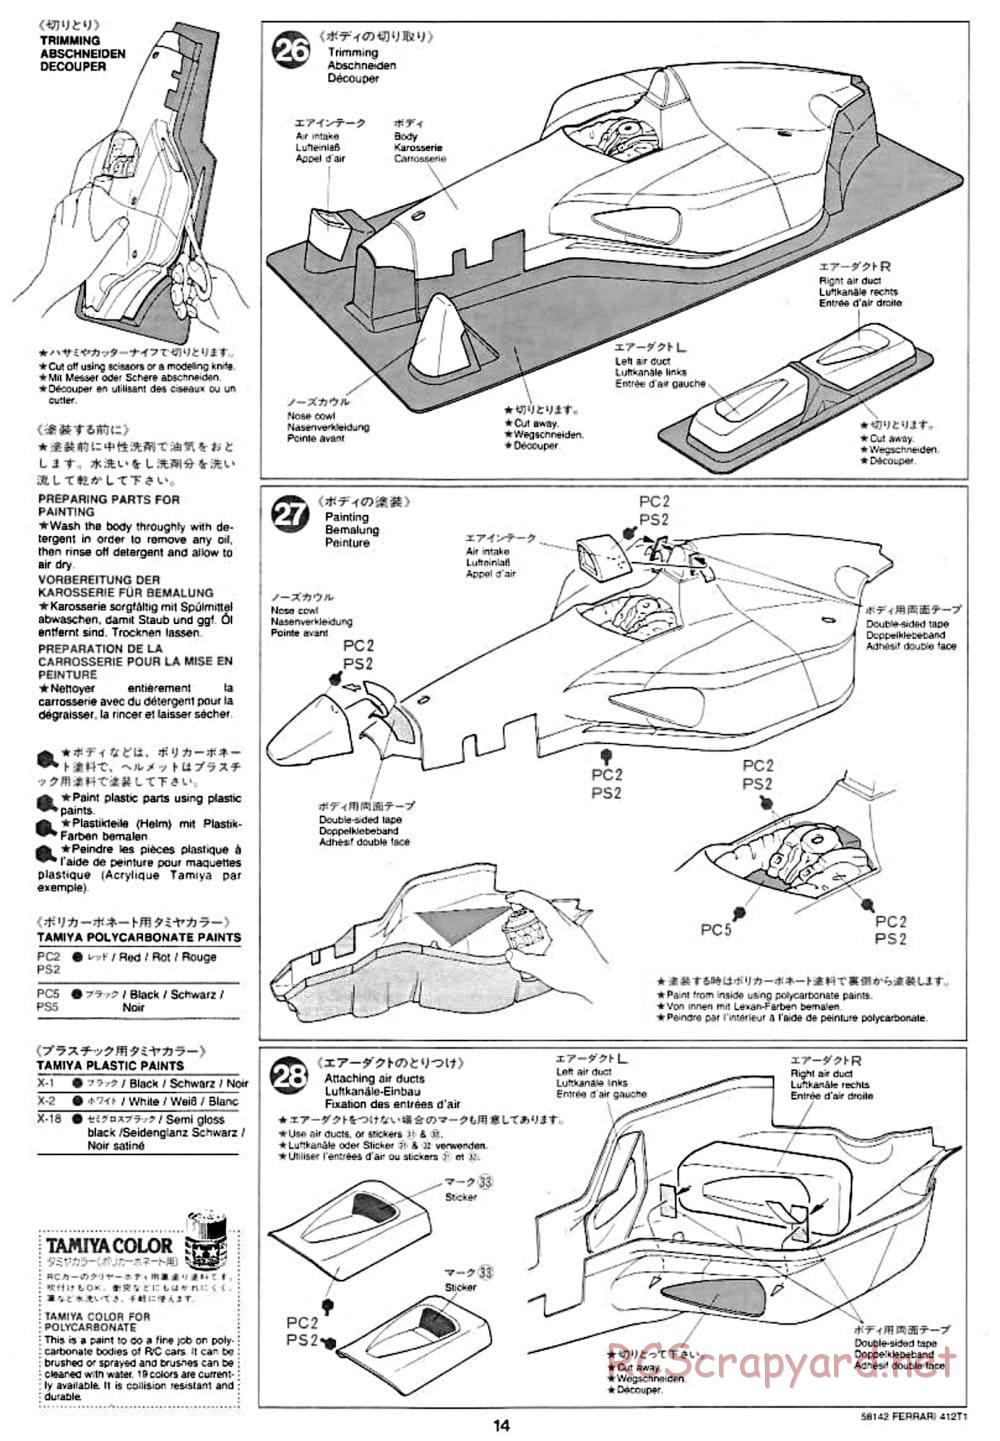 Tamiya - Ferrari 412T1 - F103 Chassis - Manual - Page 14